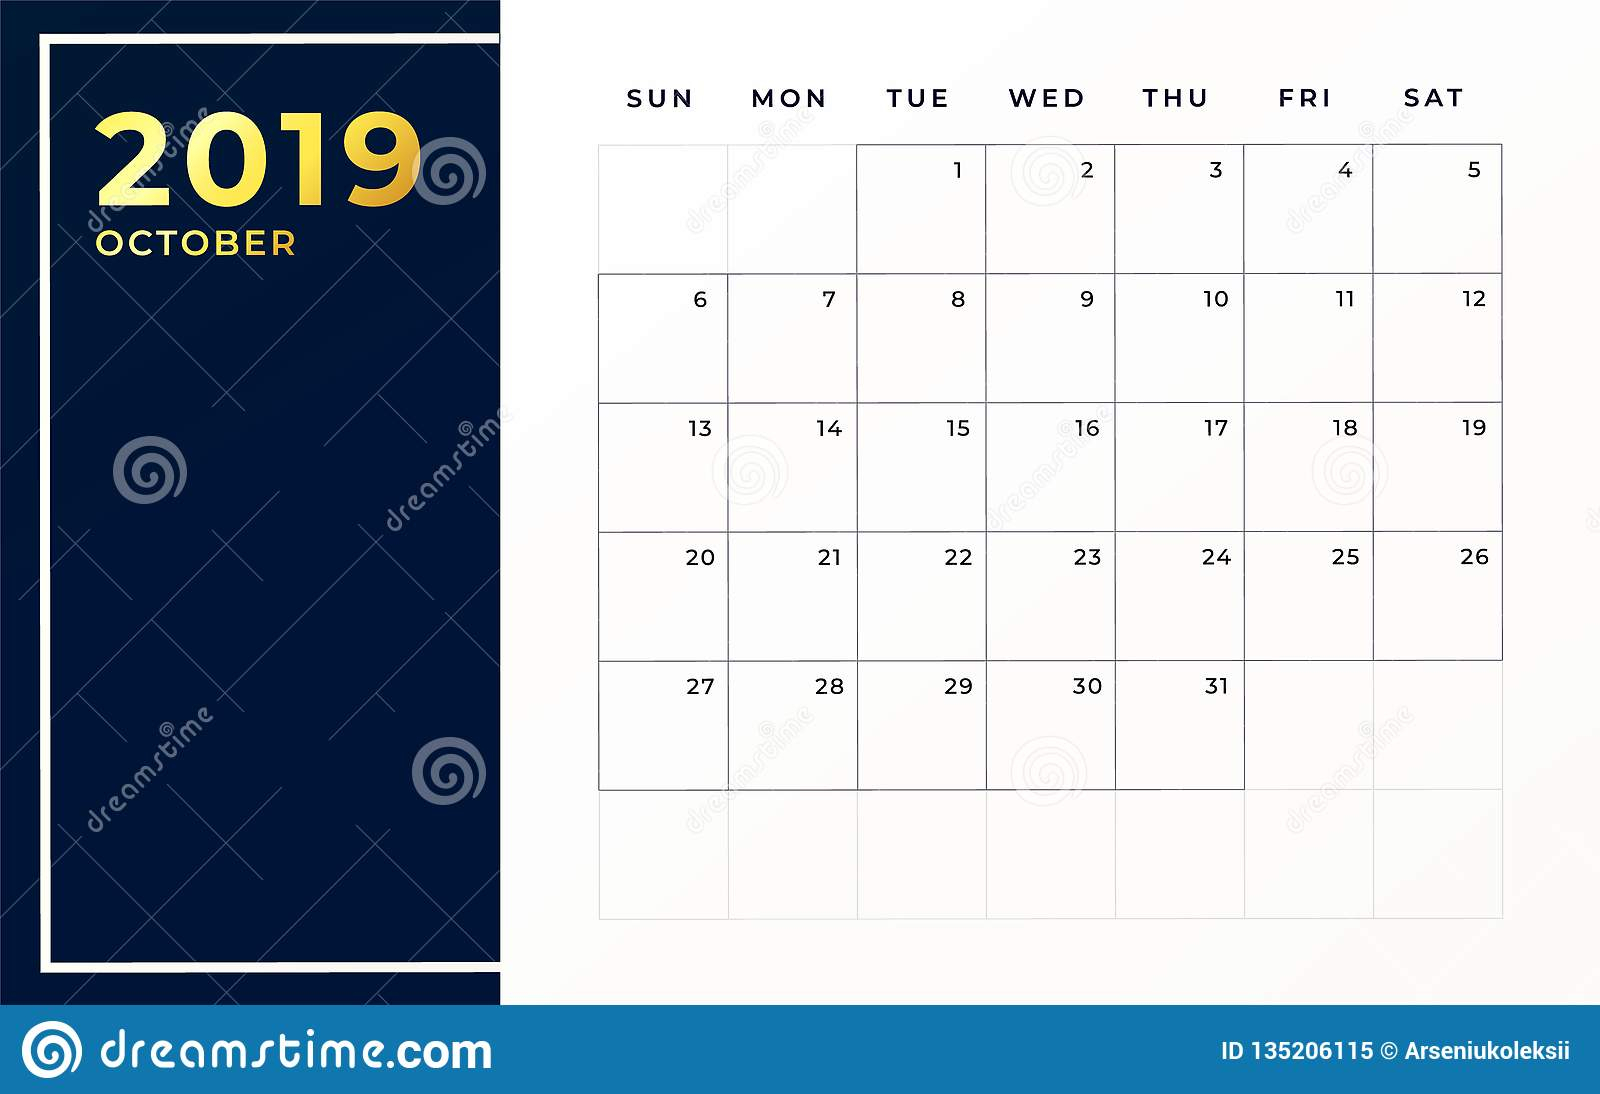 October 2019 Schedule Template. Week Starts On Sunday Empty